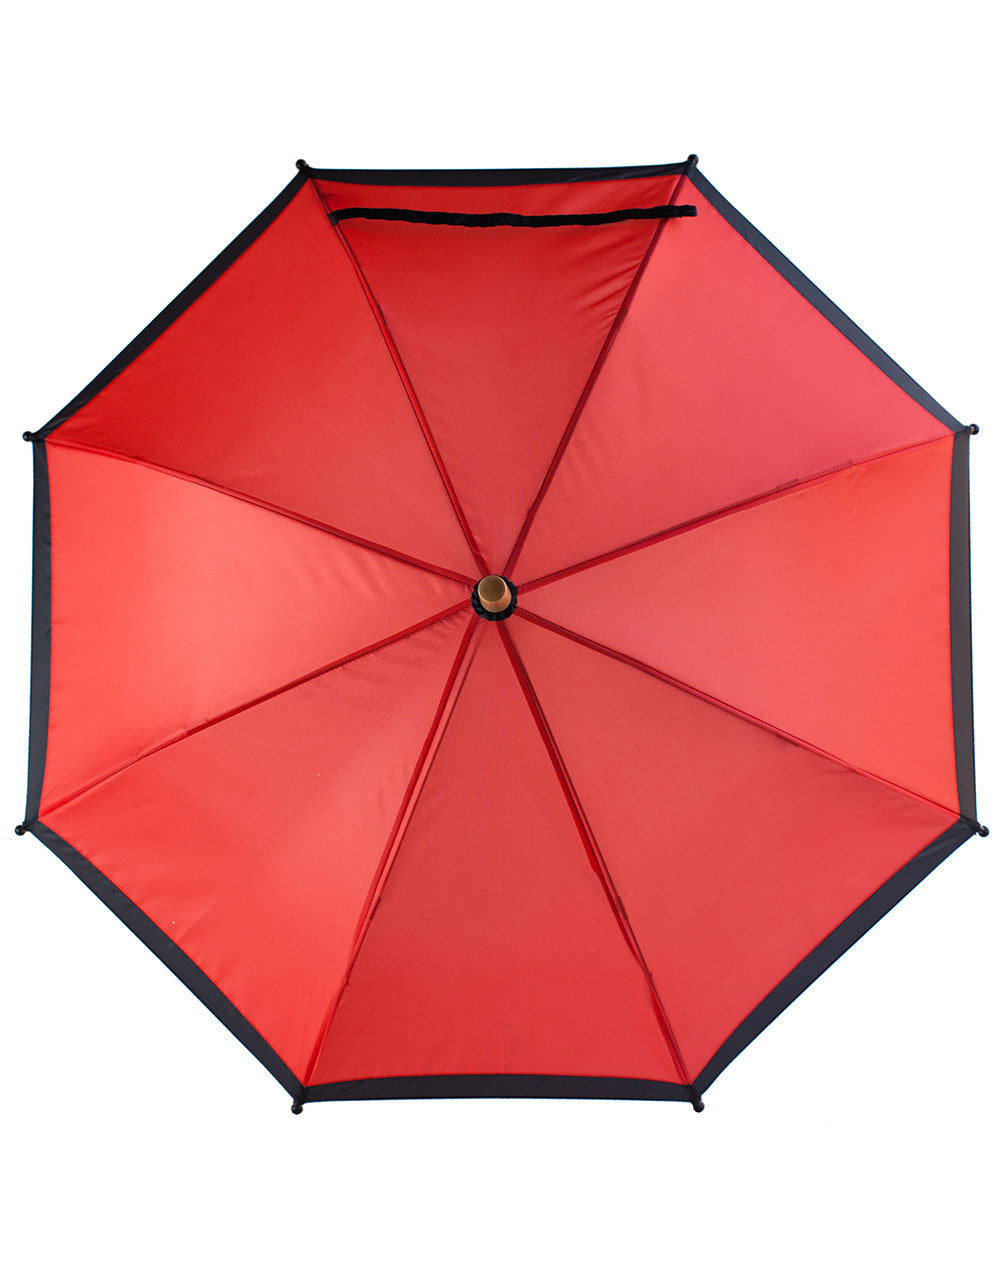 Oakiwear Kids Childrens Youth Folding Umbrella, Red